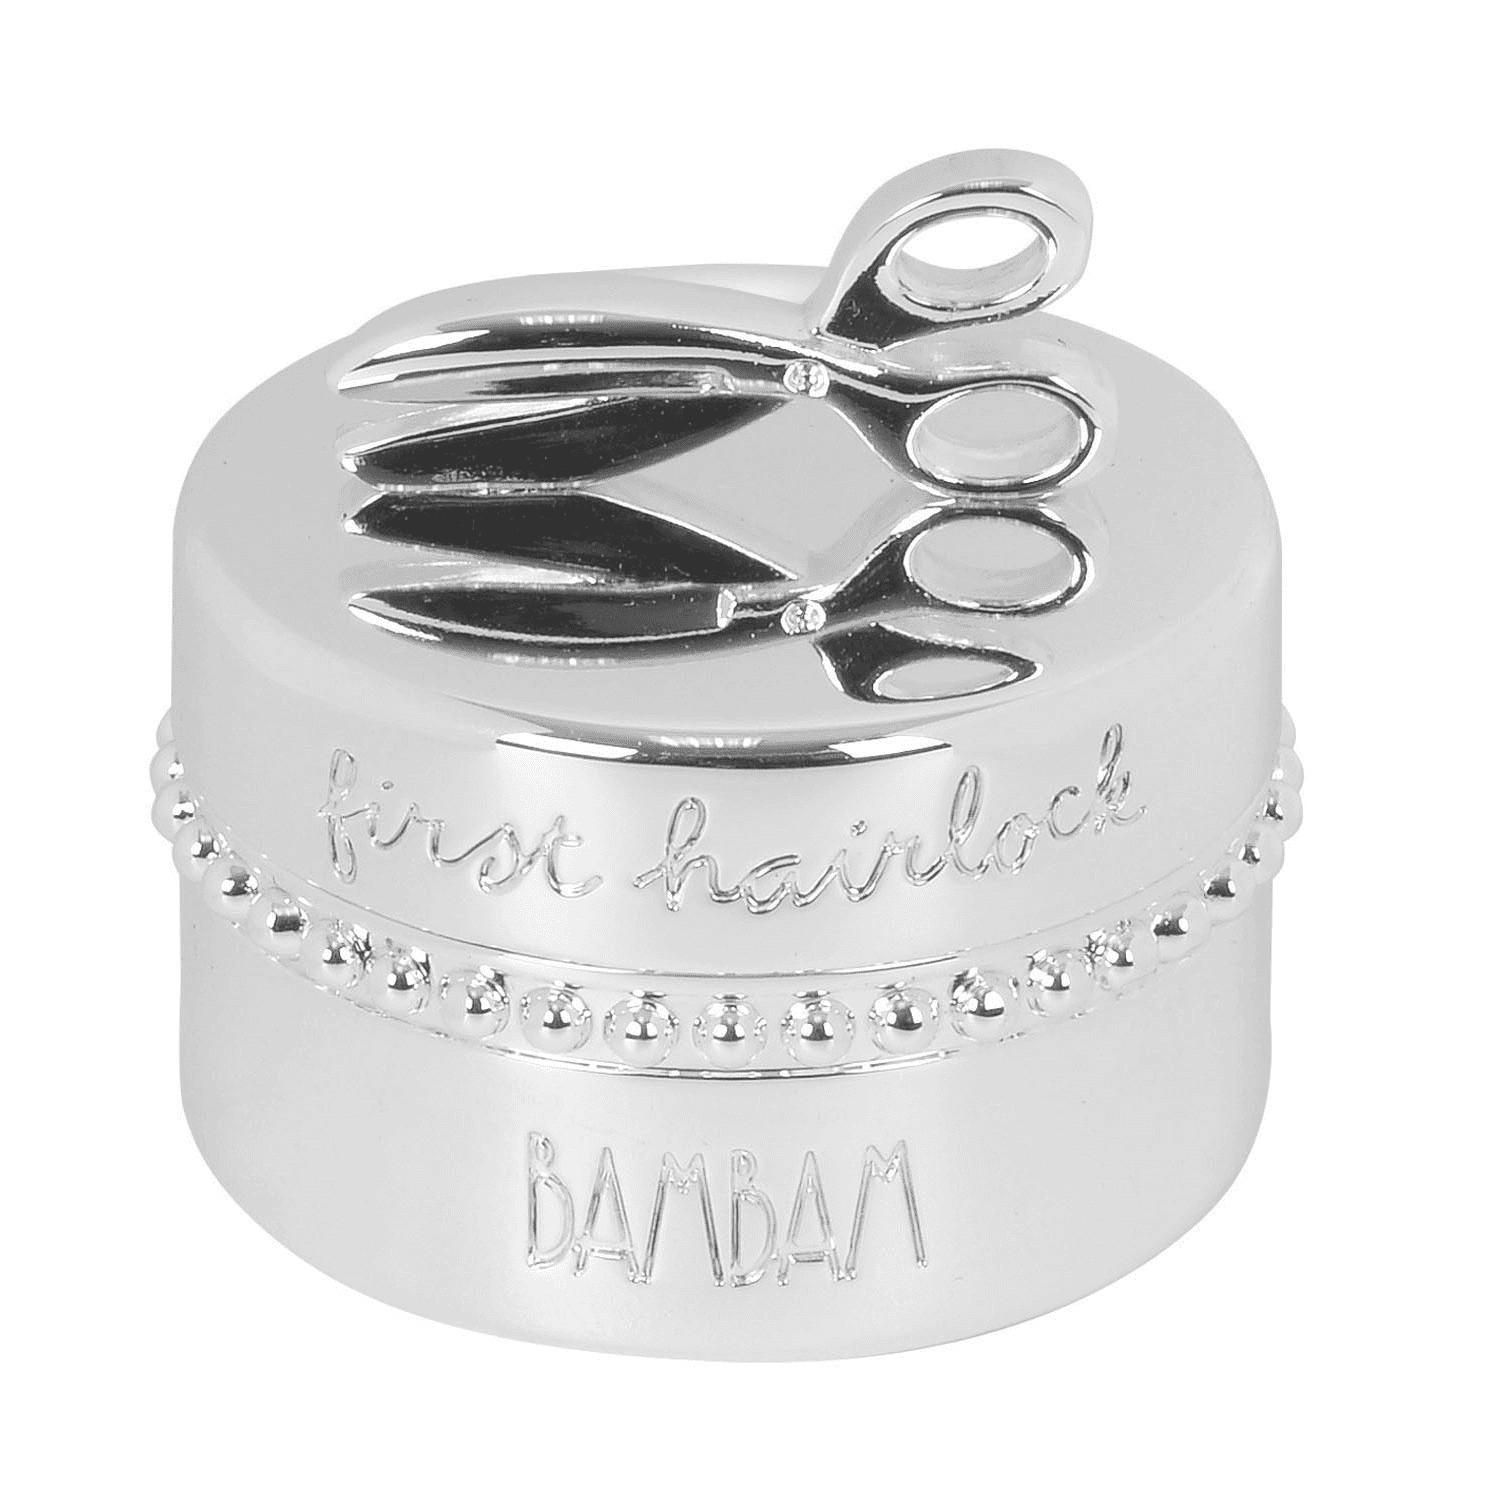 Bambam - Silver Plated Hairlock Box